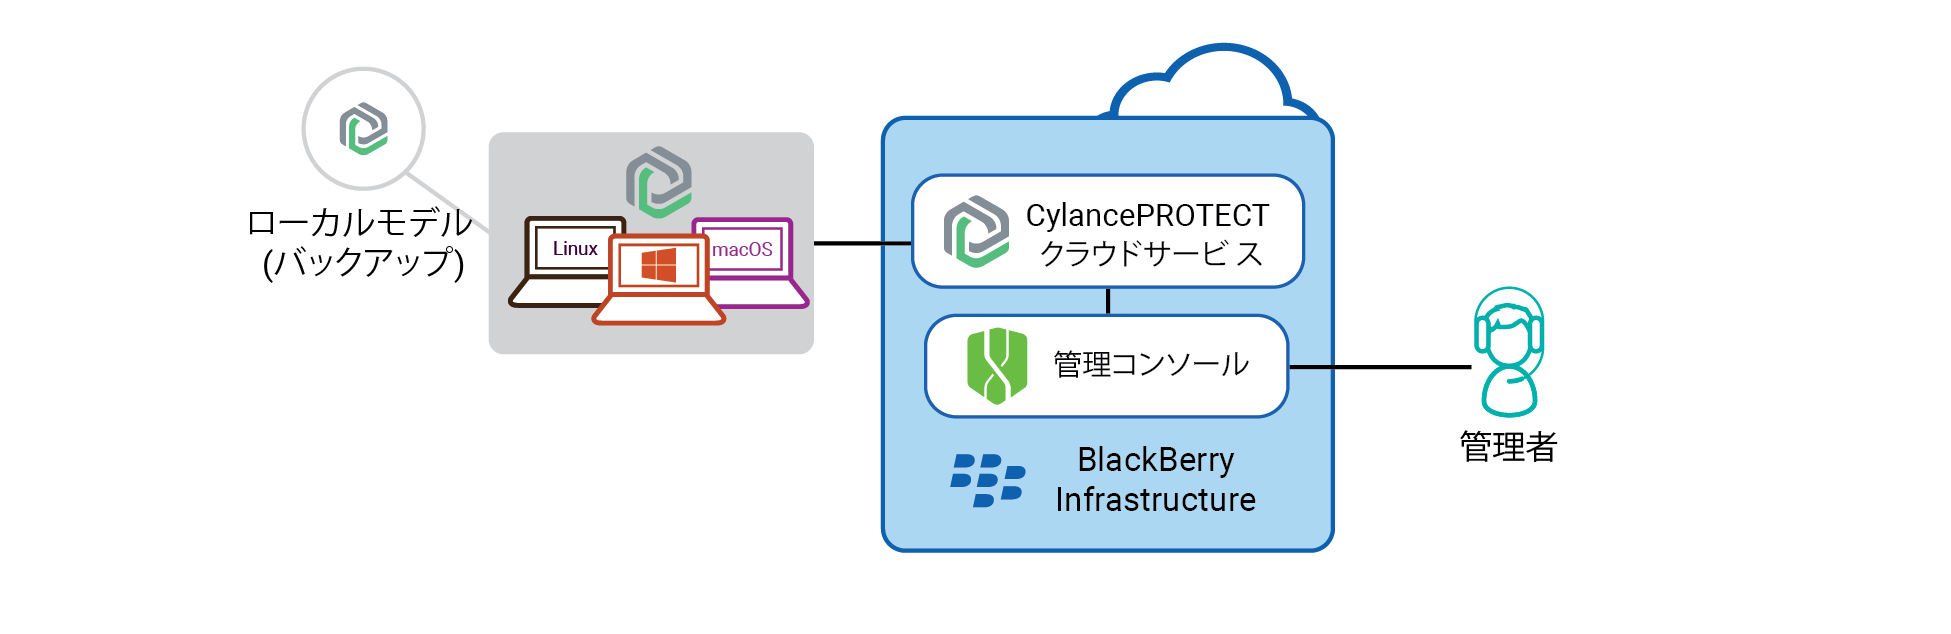 CylancePROTECT Desktop ソリューションのコンポーネント